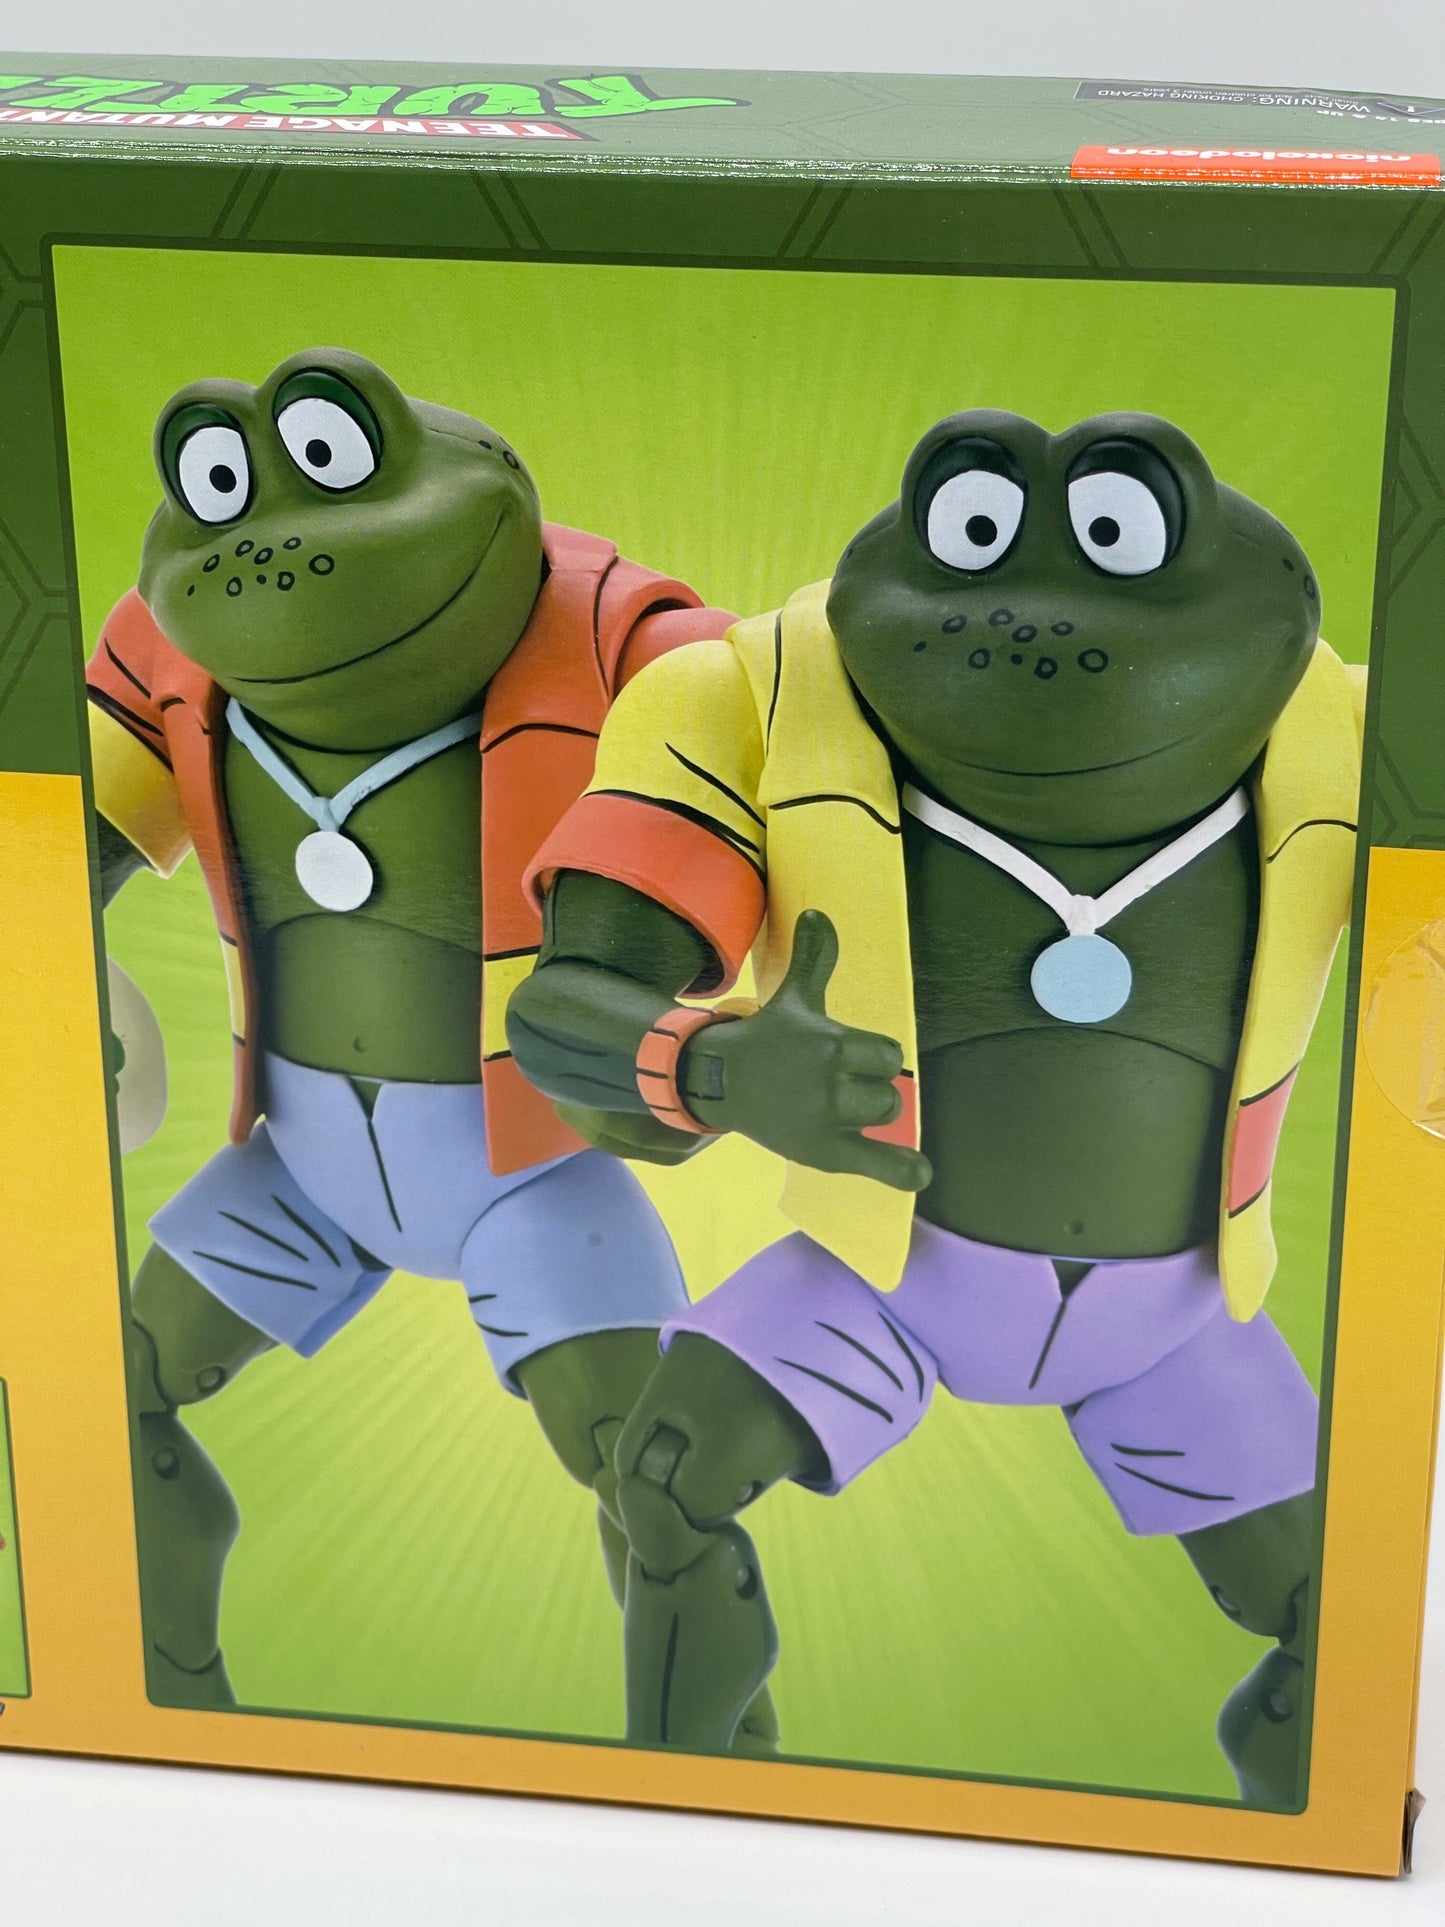 Teenage Mutant Ninja Turtles "Napoleon & Attila" Neca - Nickelodeon (2021)